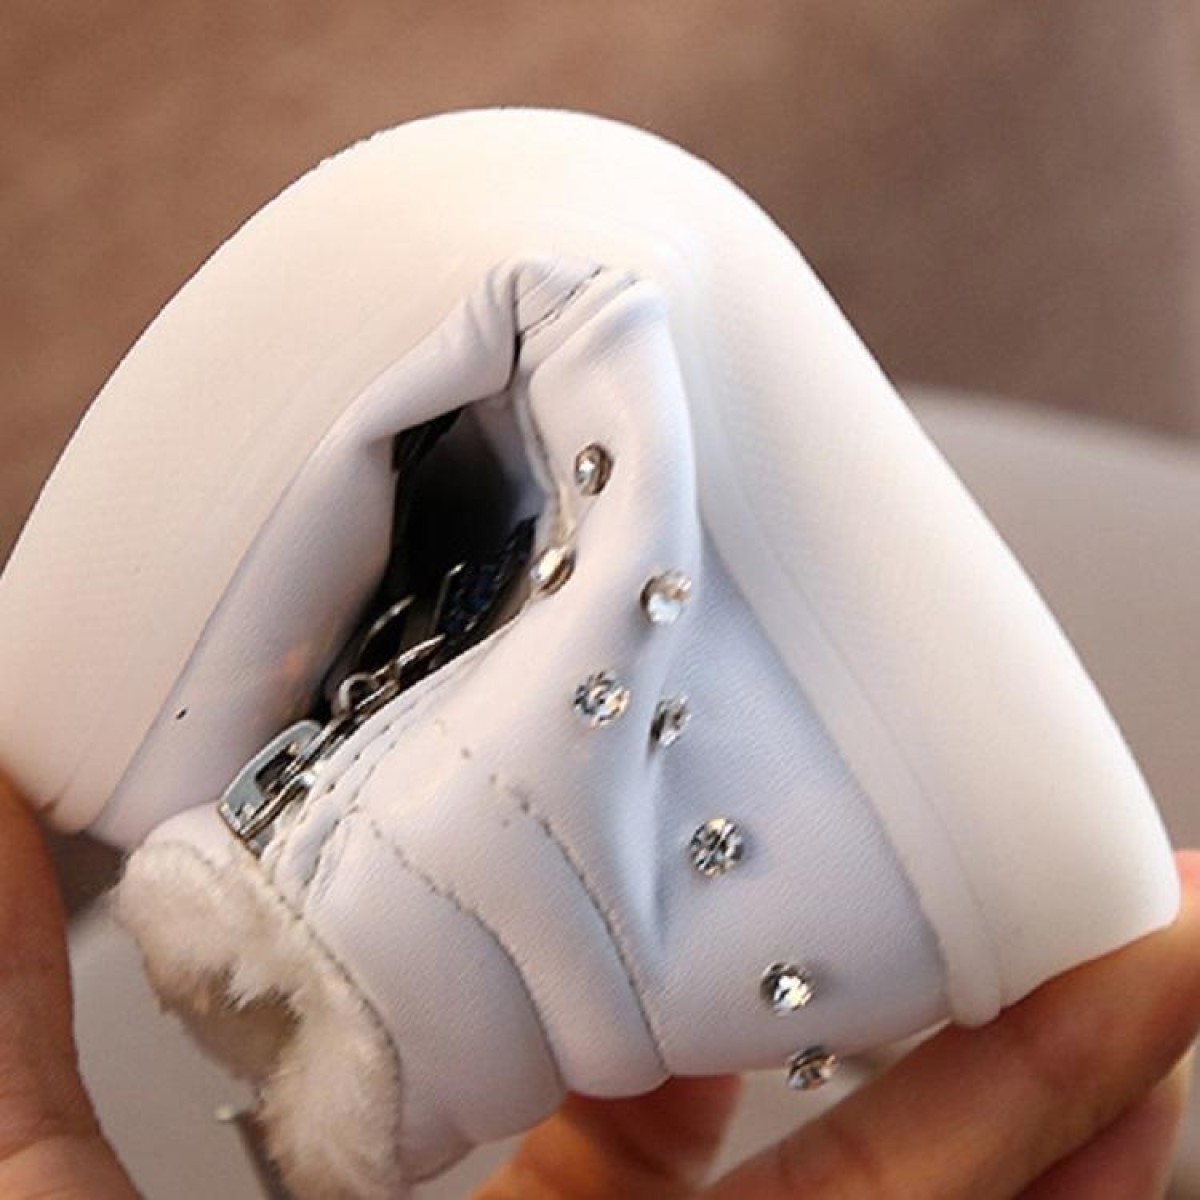 Kids Shoes Baby Infant Girls Eyelash Crystal Bowknot LED Luminous Boots Shoes Sneakers, Size:23(Black)